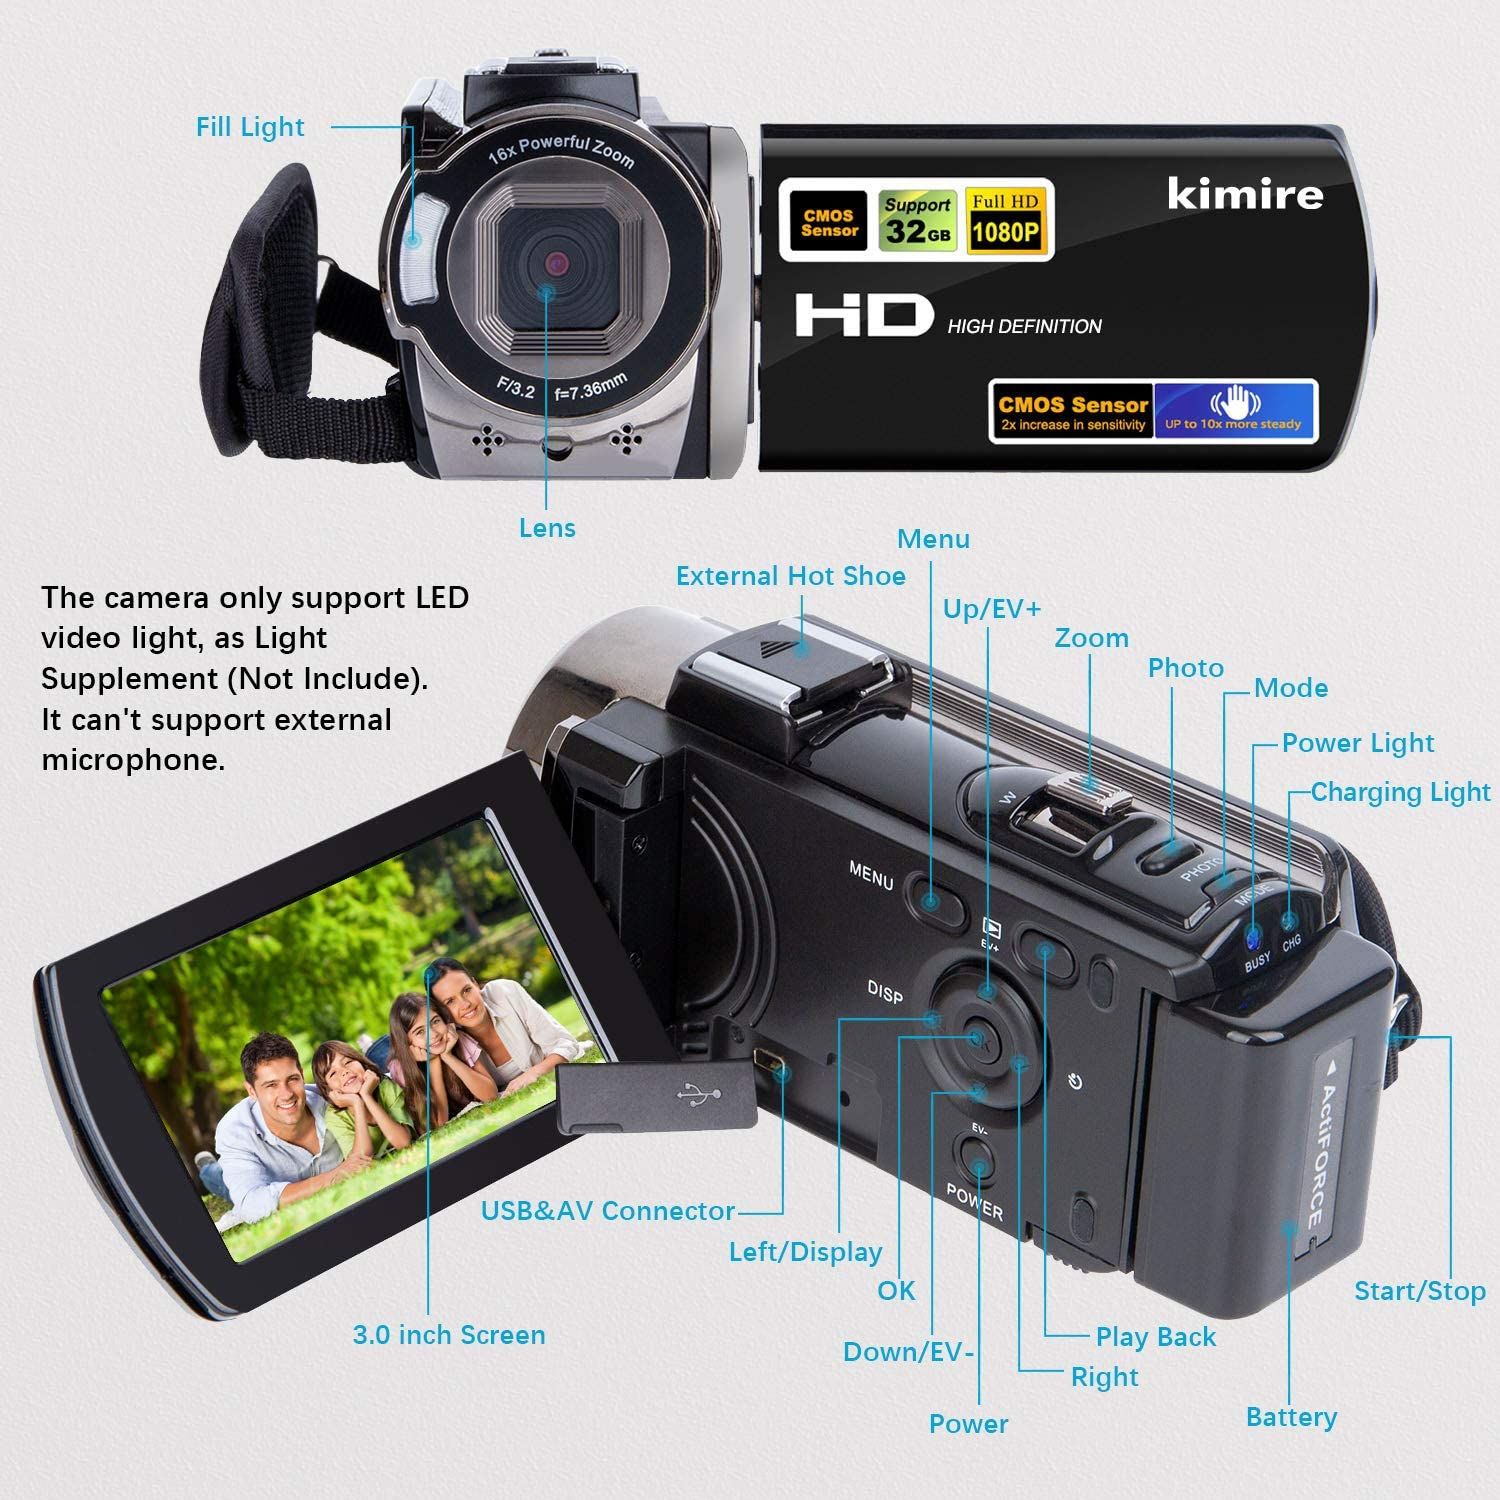 kimire Video Camera (2)